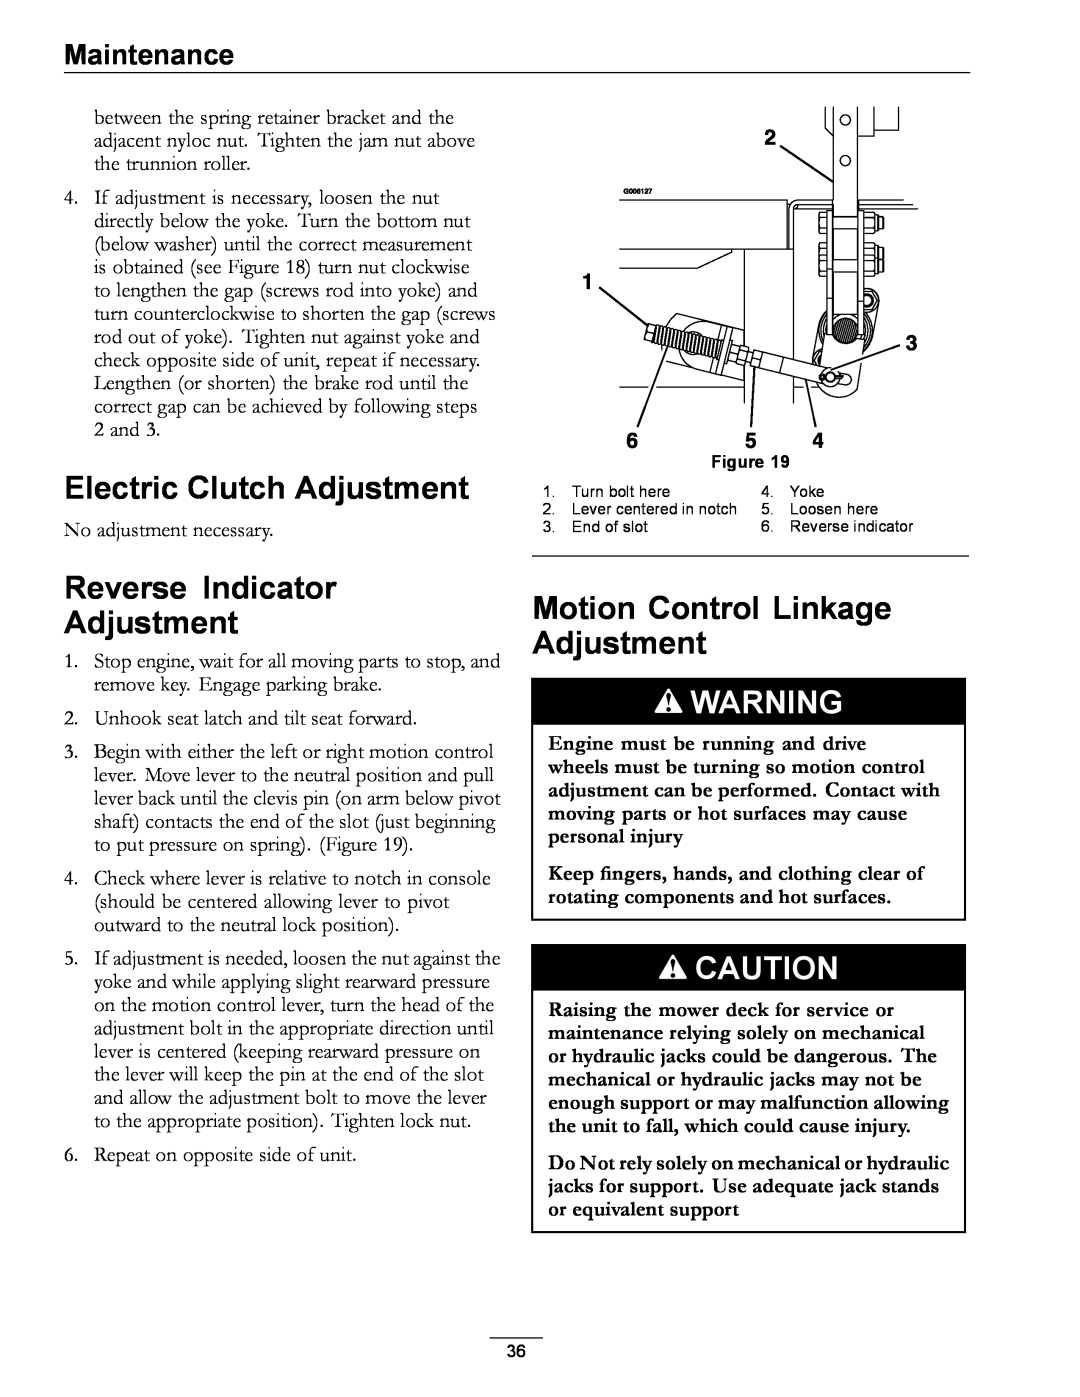 Exmark LZ27KC604 Electric Clutch Adjustment, Reverse Indicator Adjustment, Motion Control Linkage Adjustment, Maintenance 